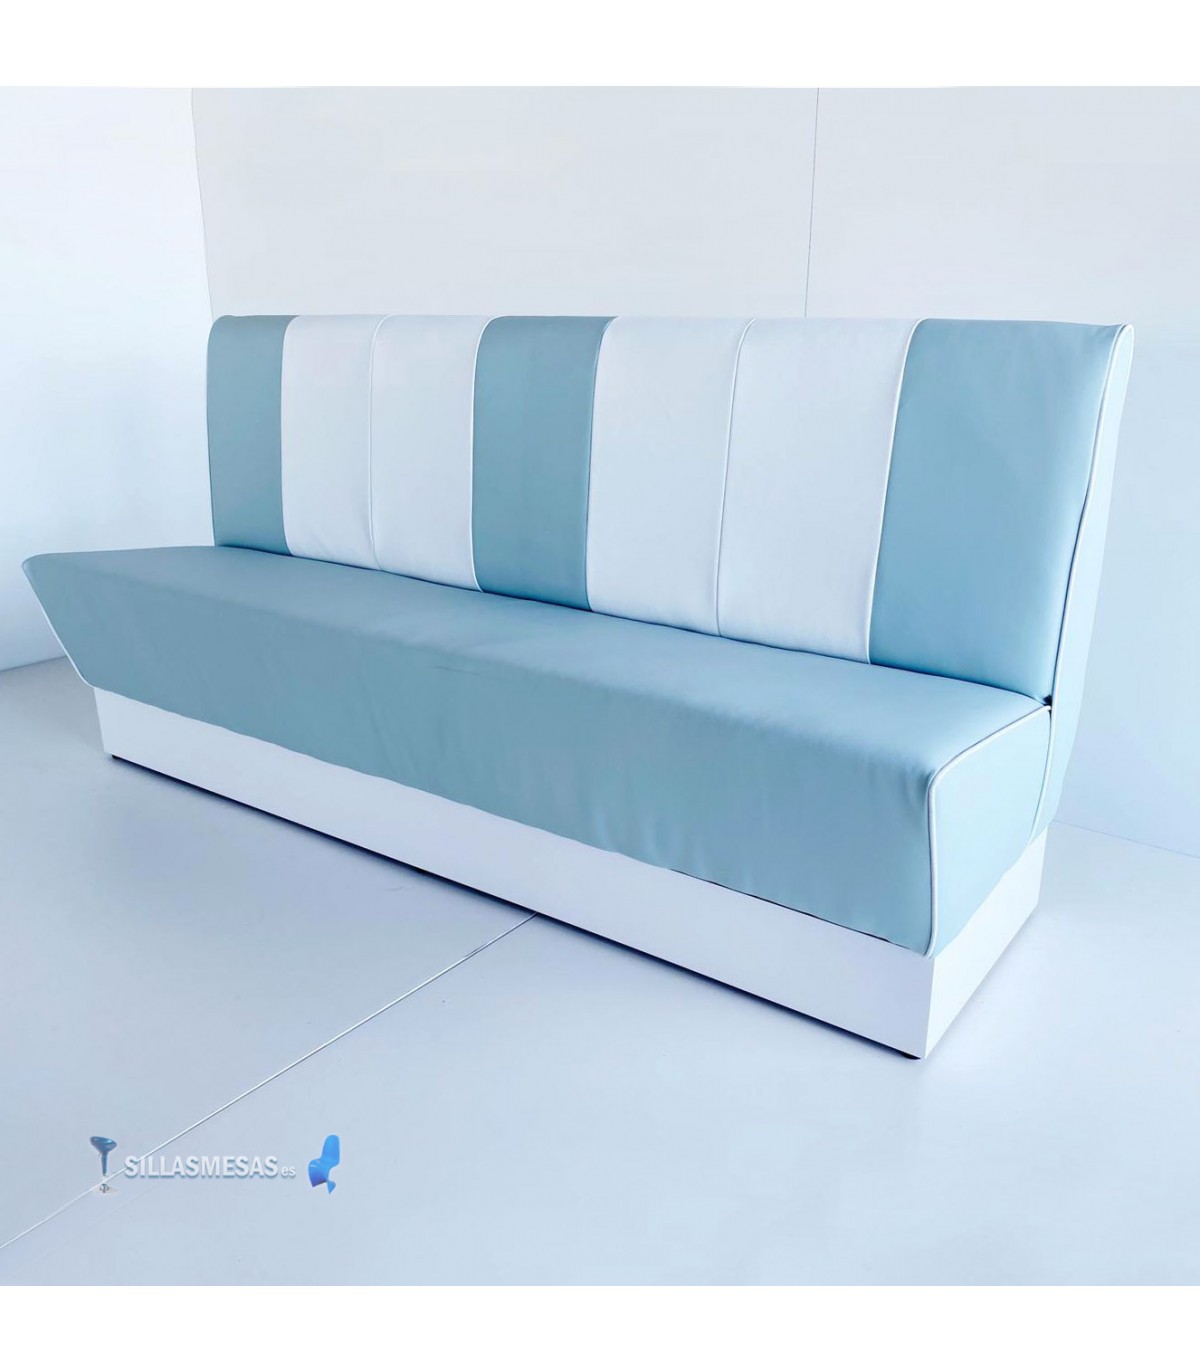 Sofa bancada estilo SillasMesas.es